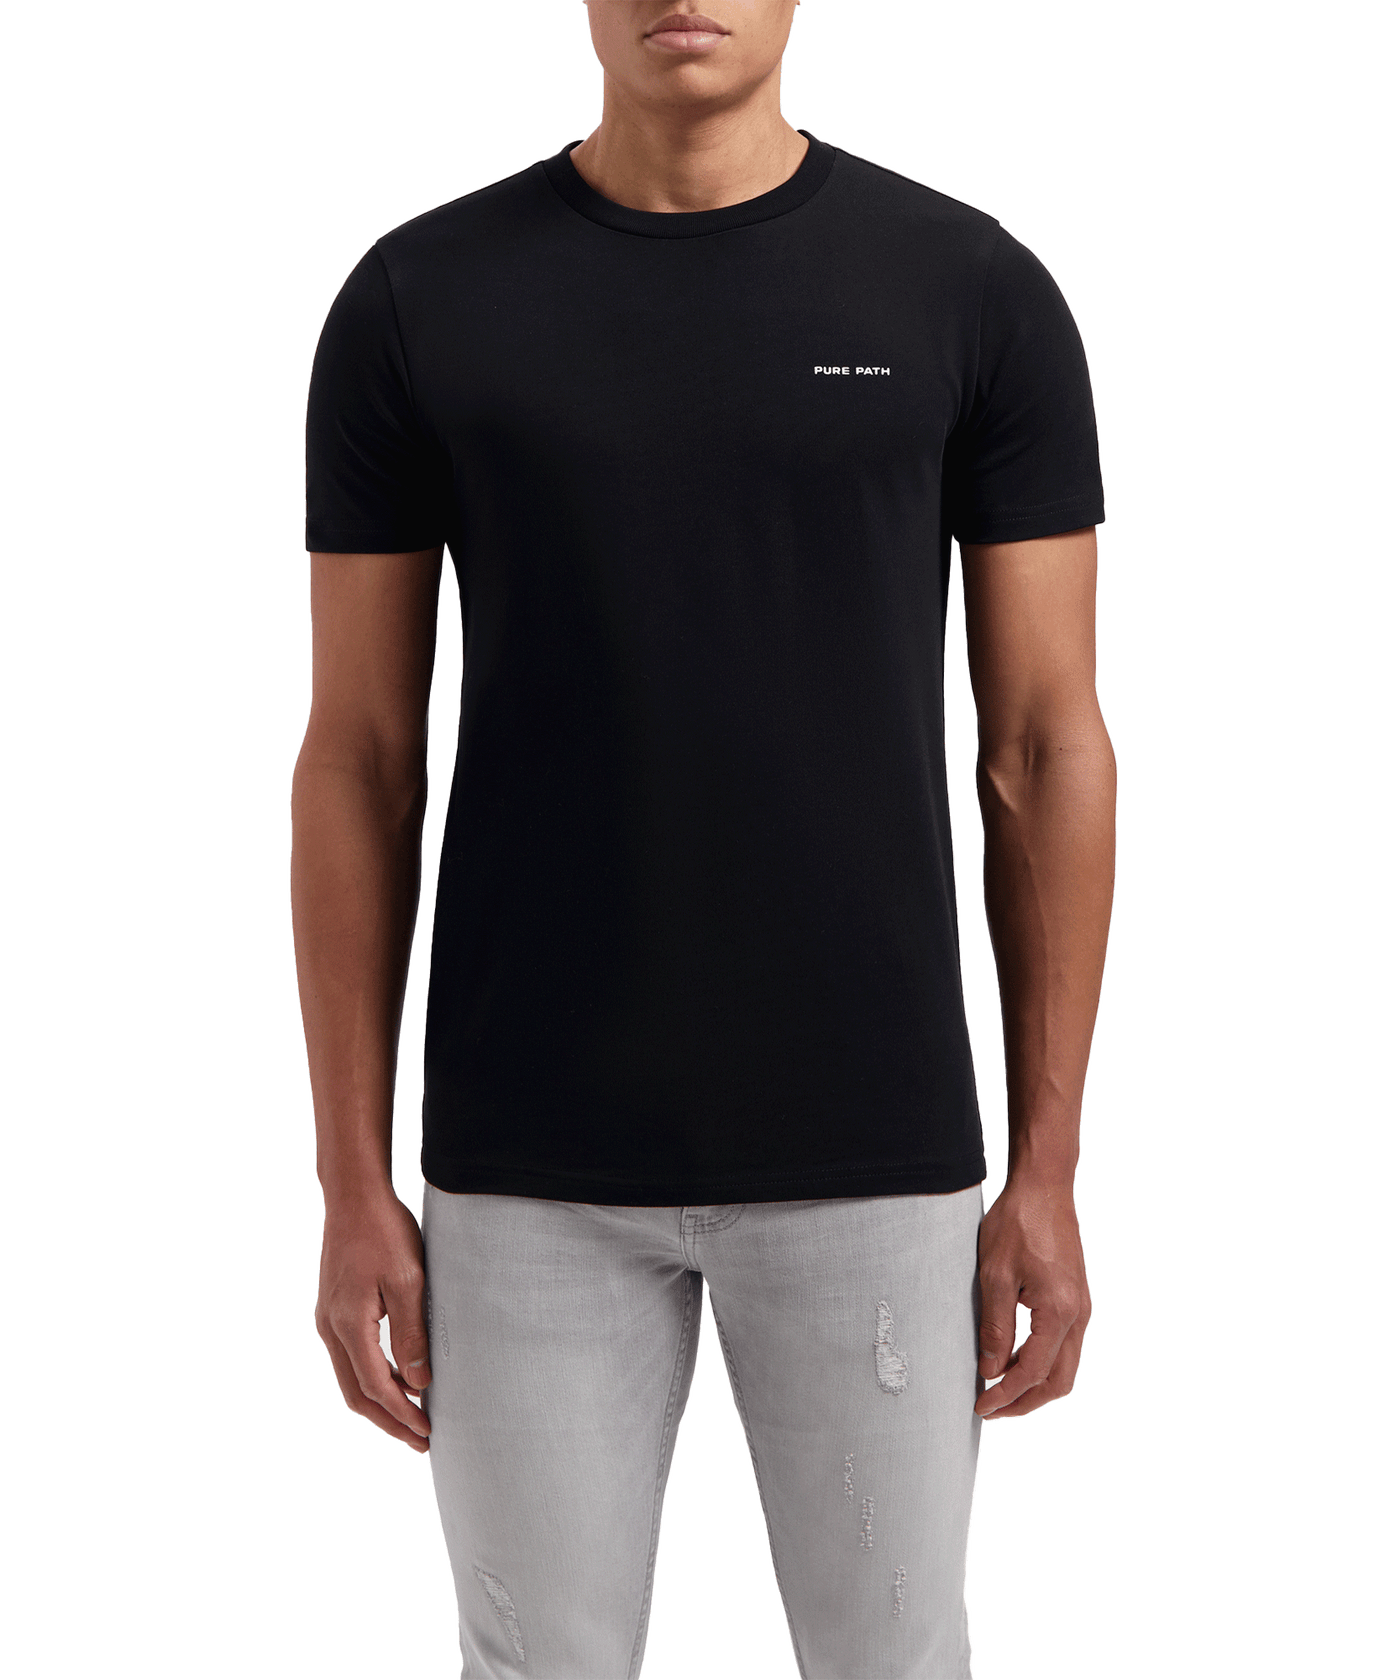 Pure Path - 24010107 - Crewneck T-shirt - Black